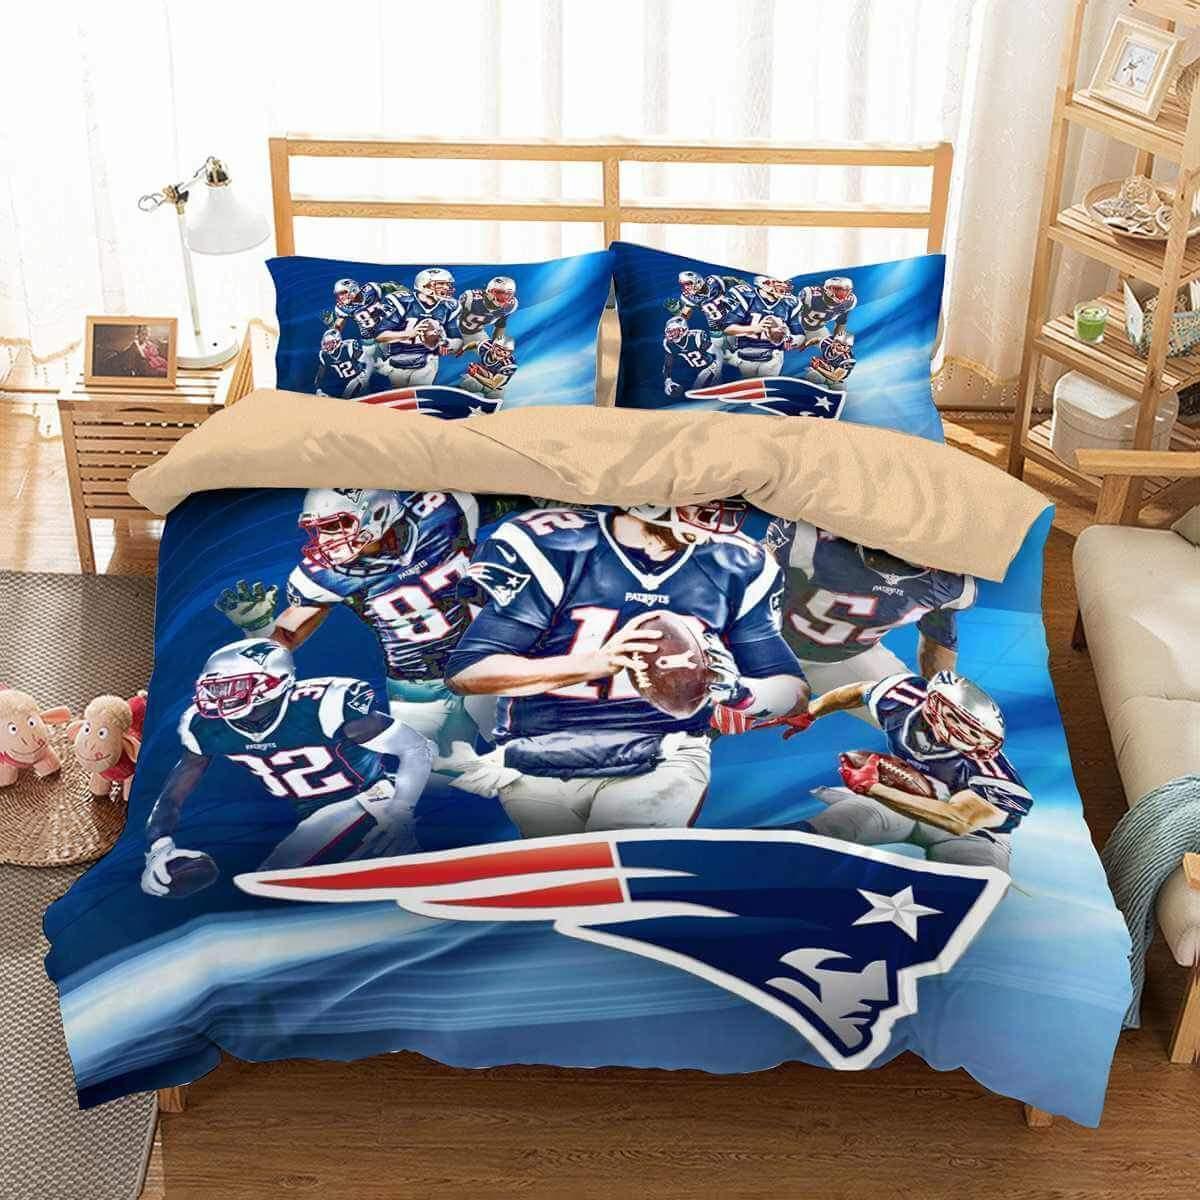 BEST New England Patriots NFL players Duvet Cover Bedding Set